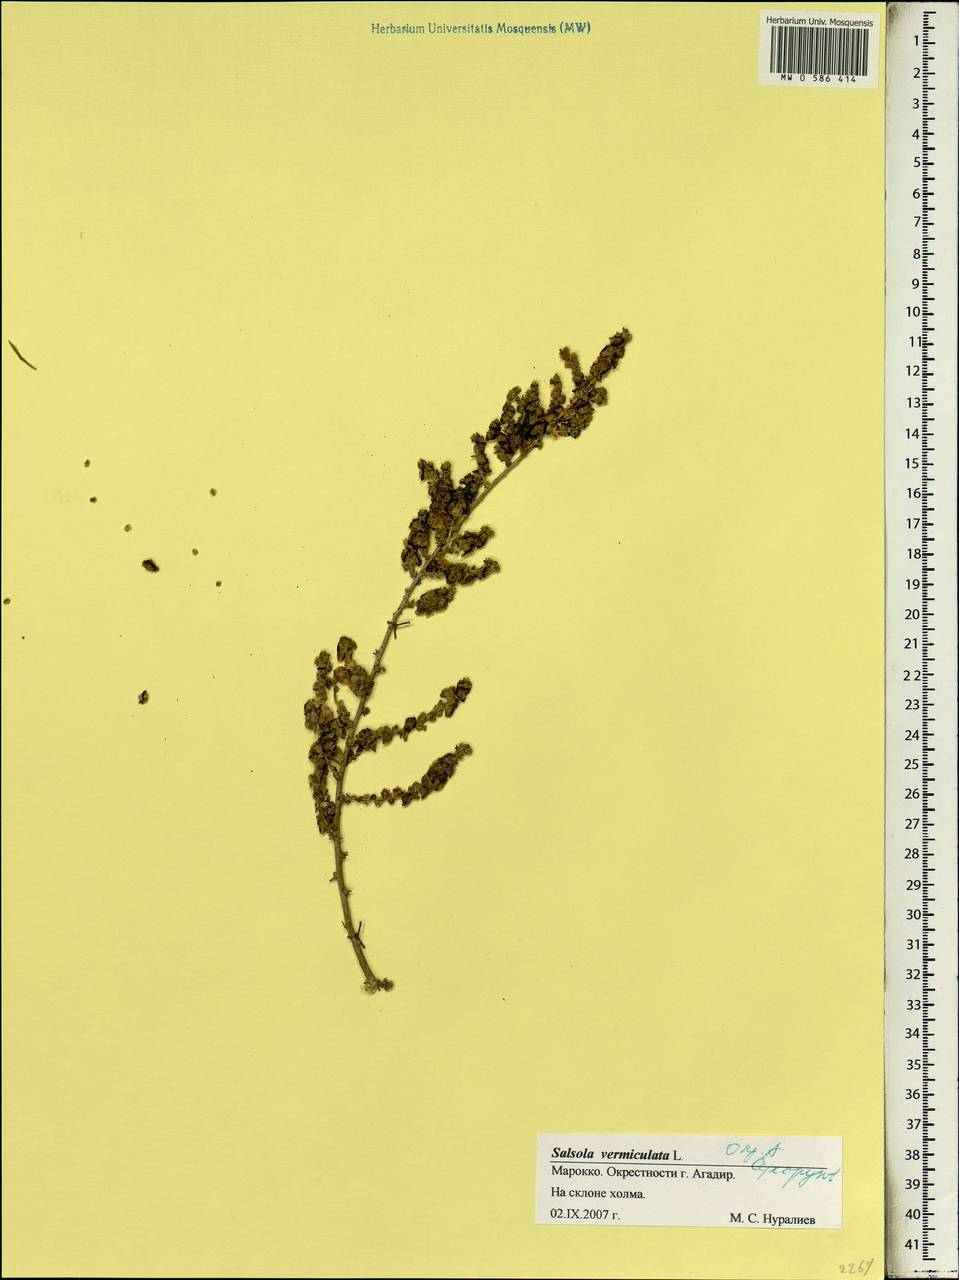 Nitrosalsola vermiculata (L.) Theodorova, Африка (AFR) (Марокко)